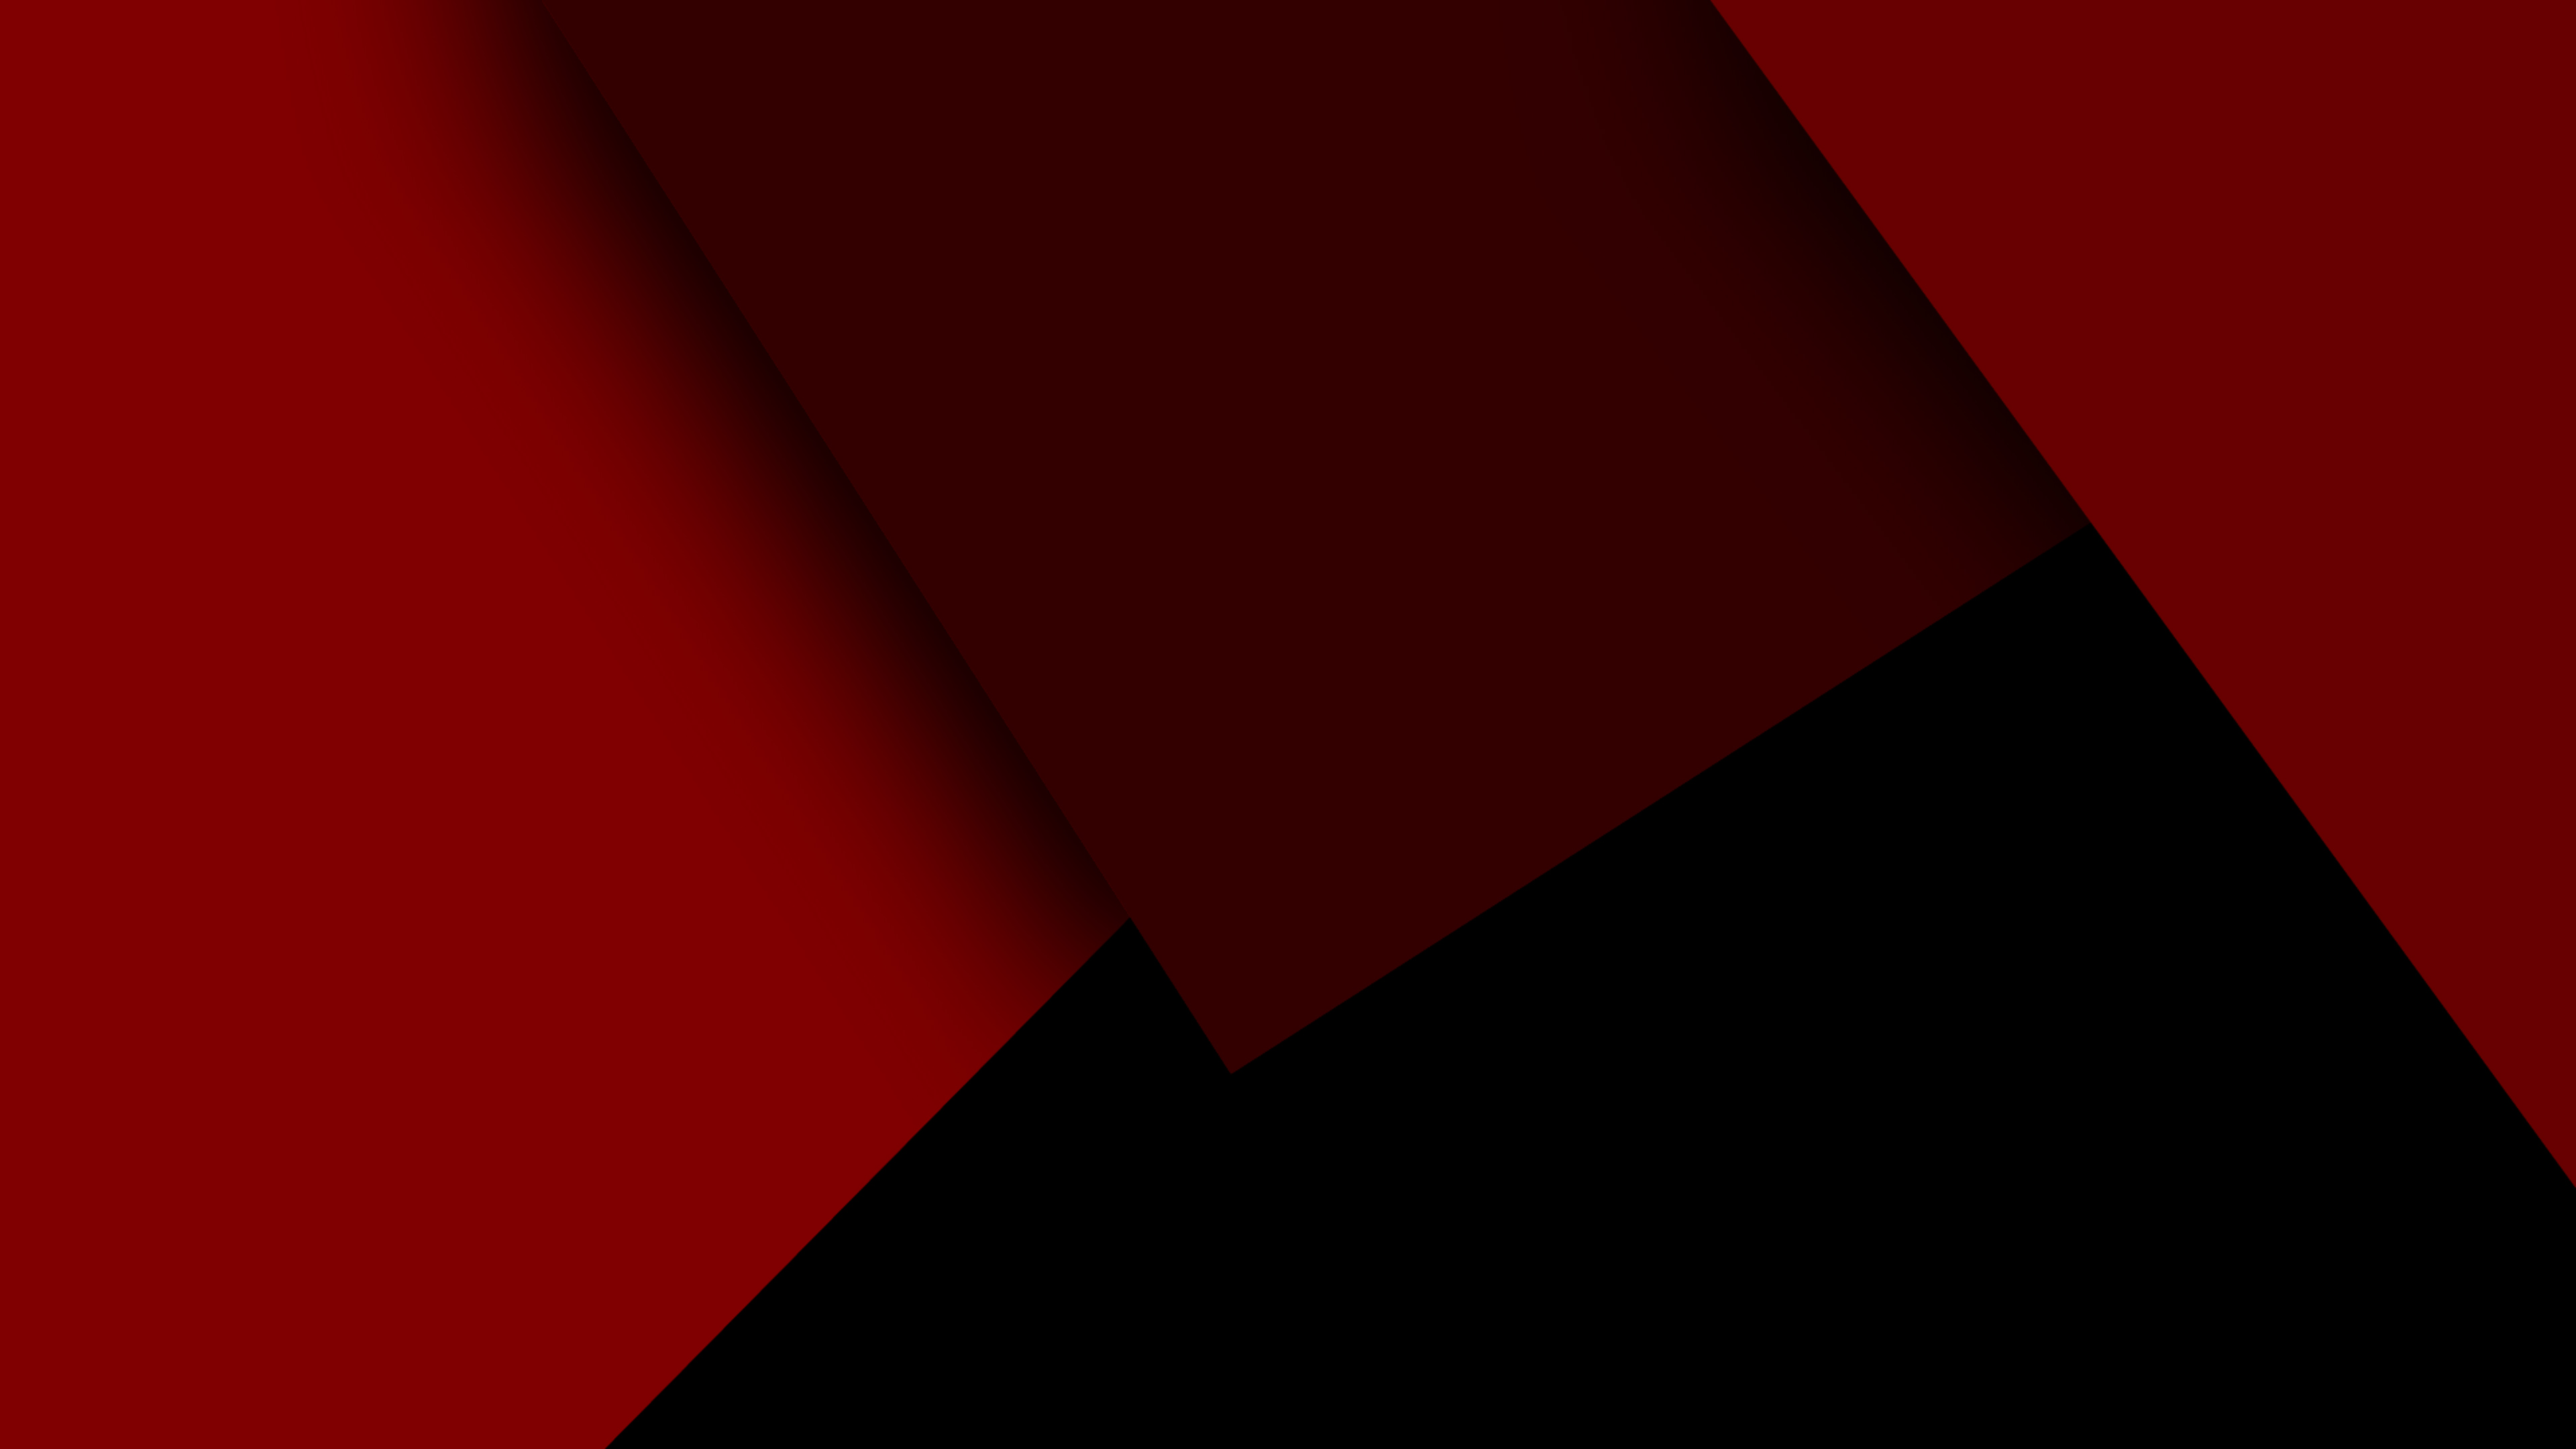 4K wallpaper: 1080p Red And Black Wallpaper Hd